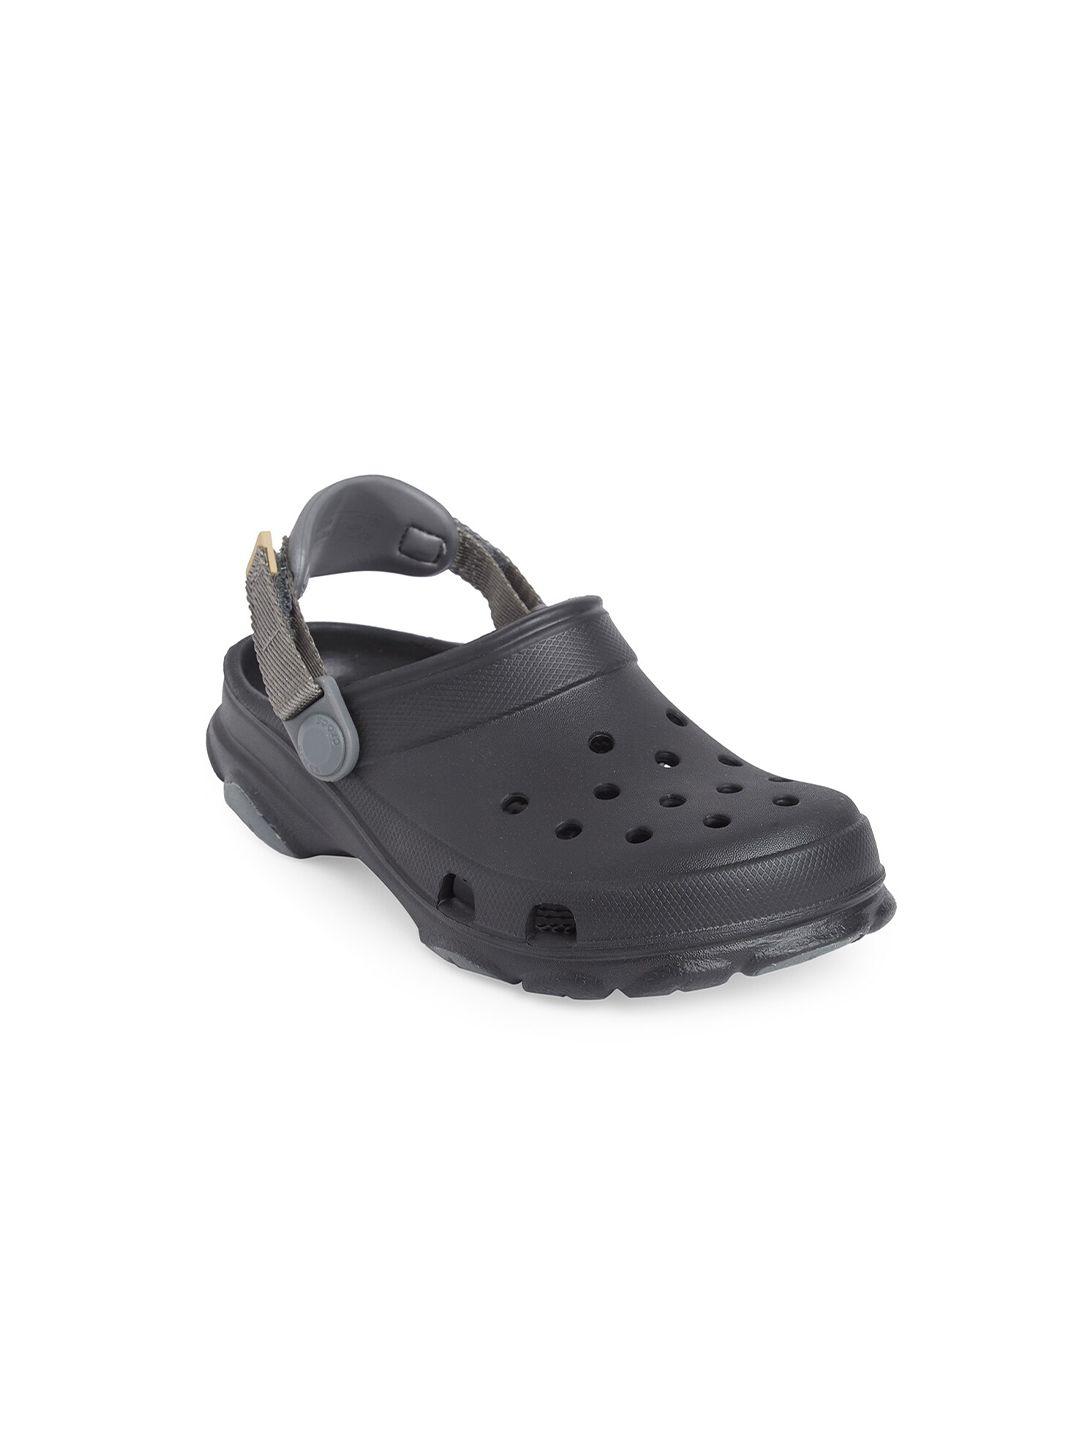 crocs kids black & grey solid clogs